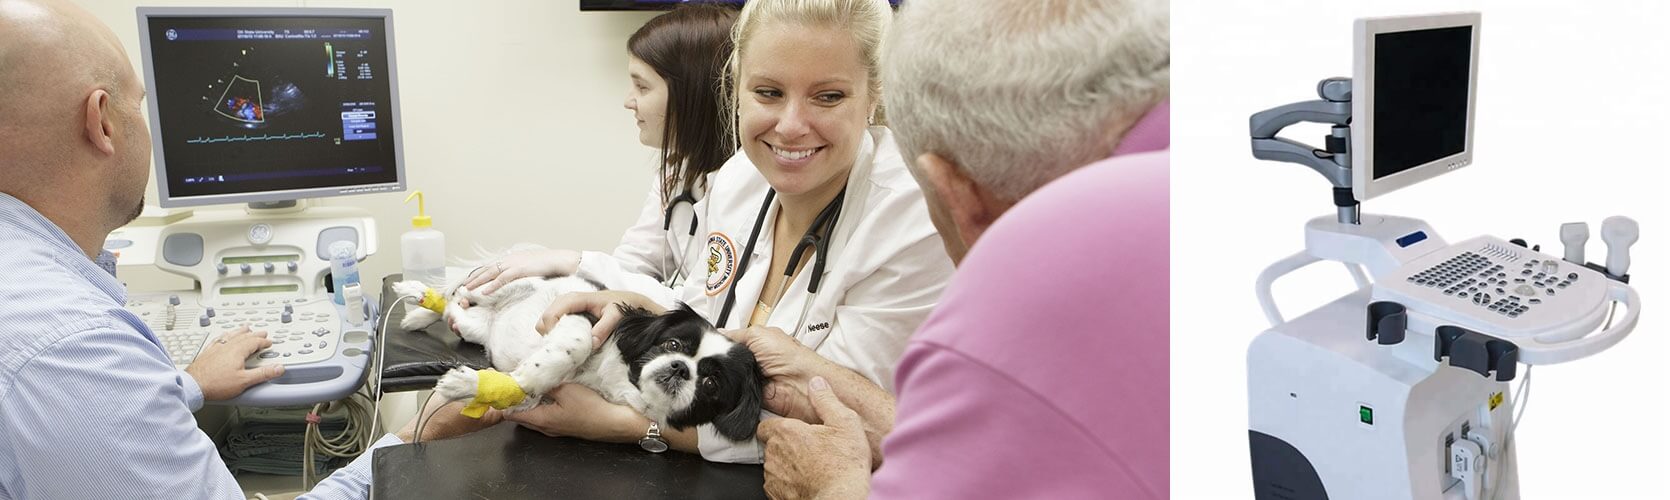 What can puppy ultrasound do - Puppy Ultrasound